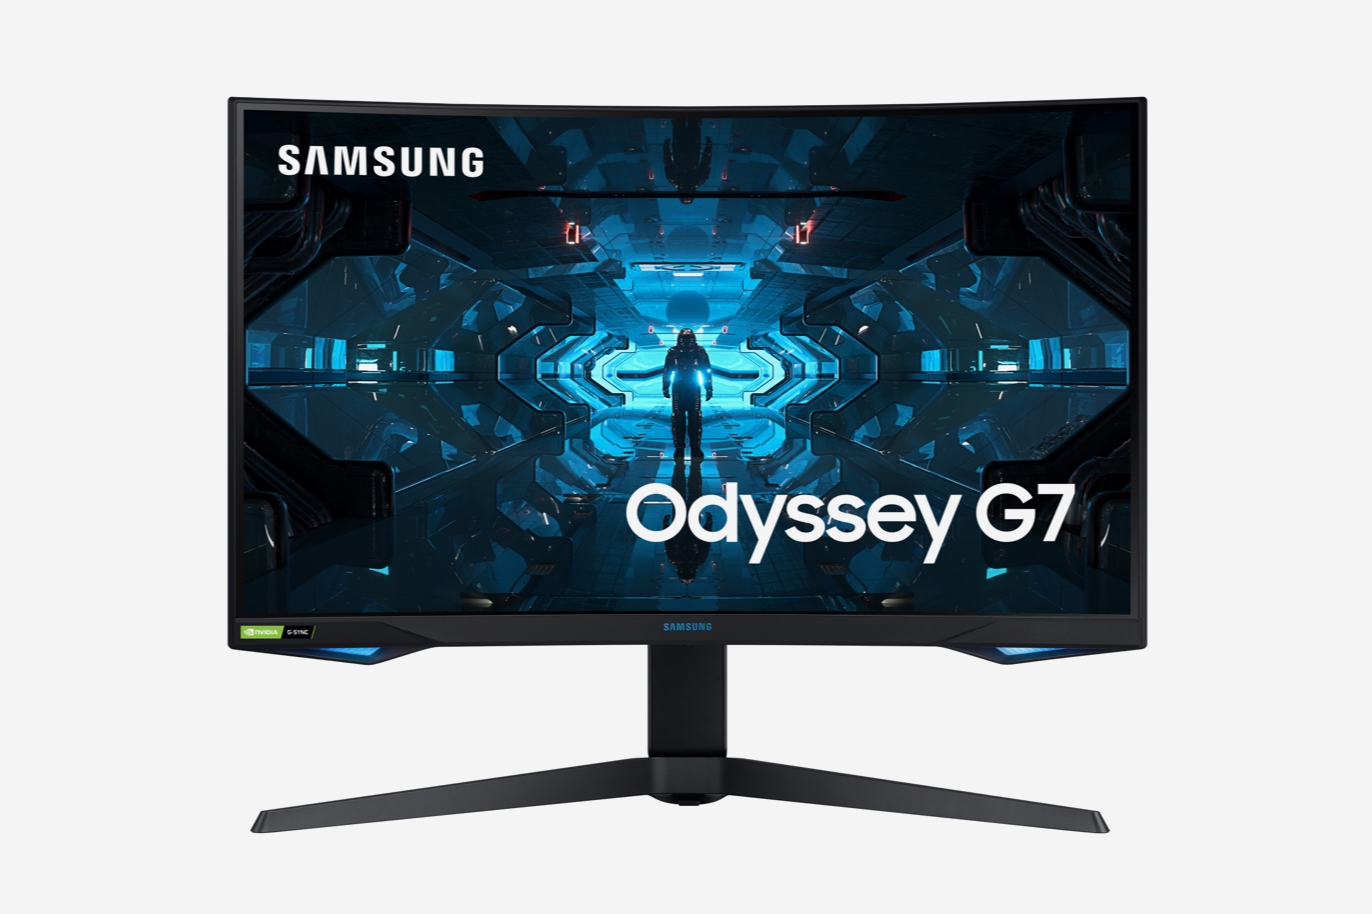  SAMSUNG 27 Odyssey G7 Series WQHD (2560x1440) Gaming